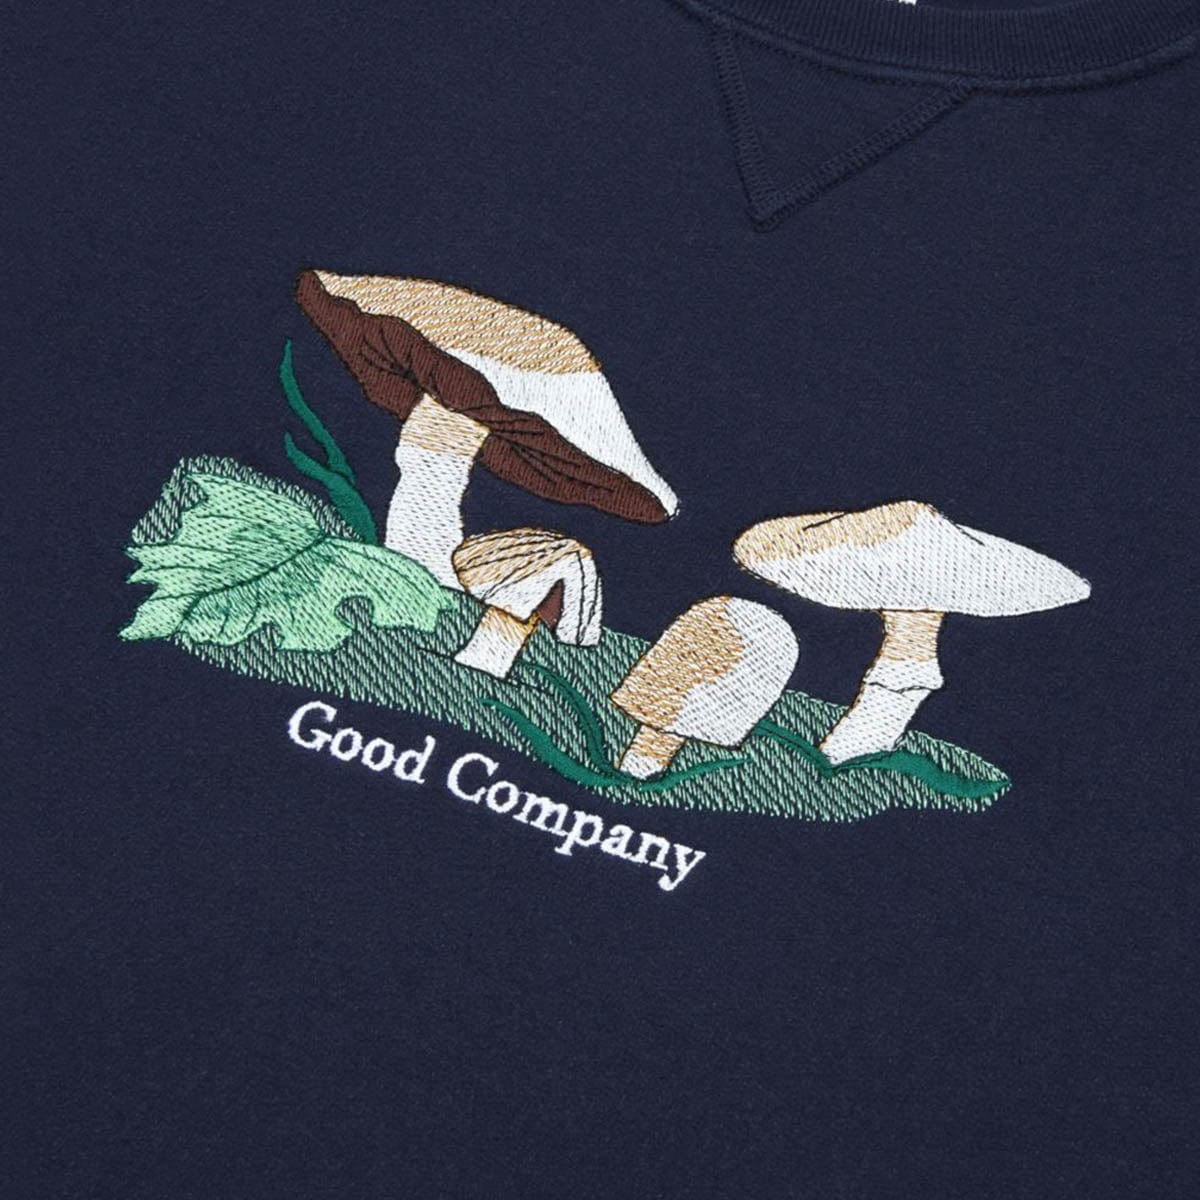 The Good Company Hoodies & Sweatshirts FUNGI CREWNECK